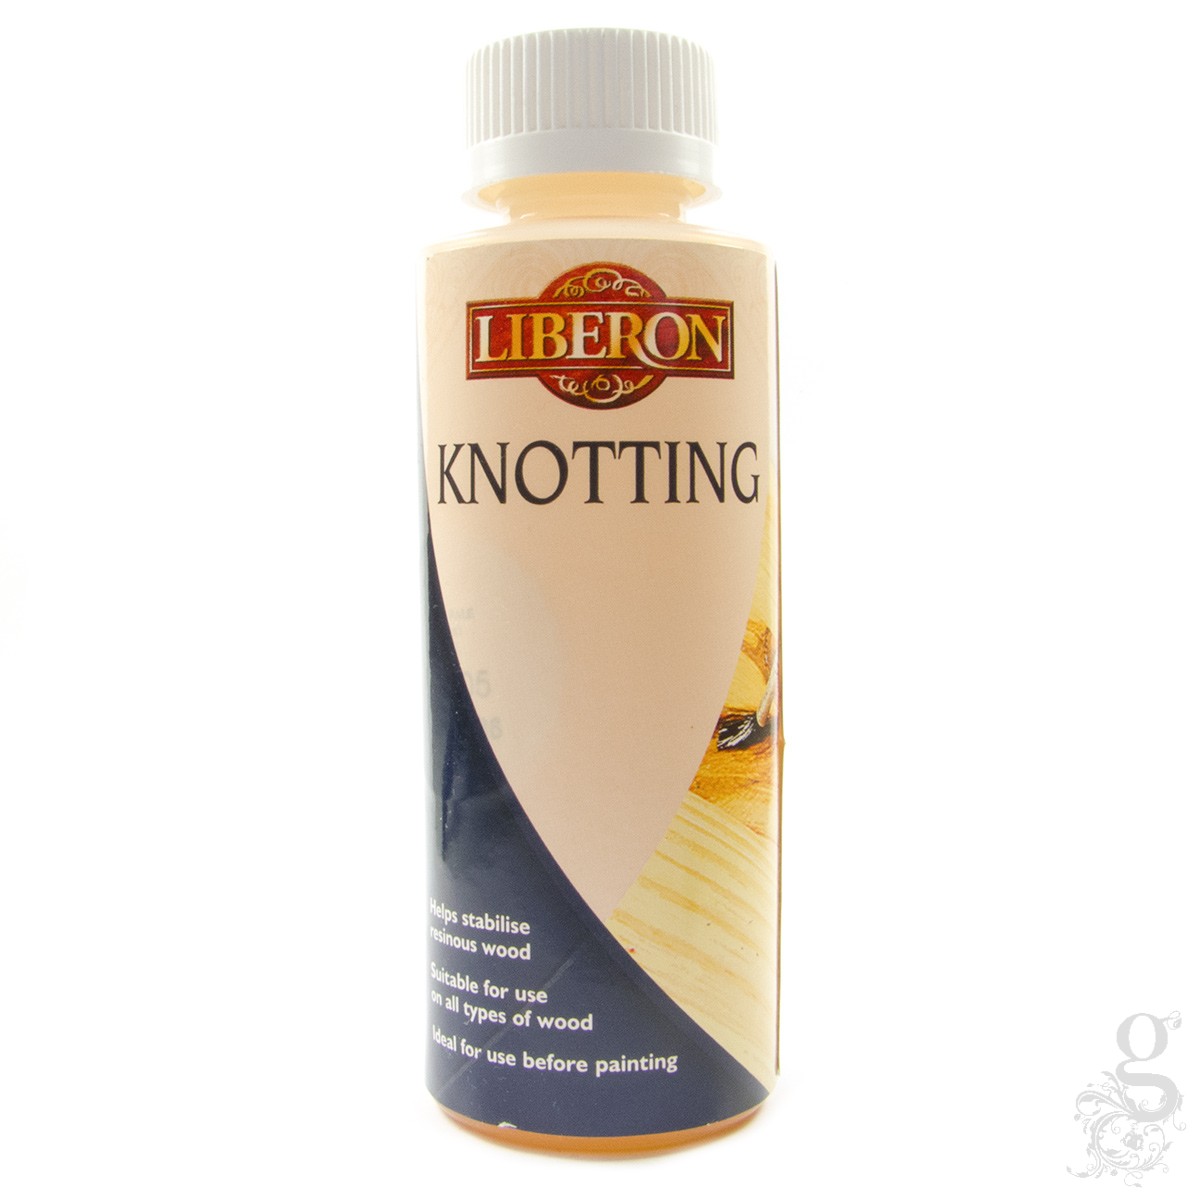 Liberon Knotting